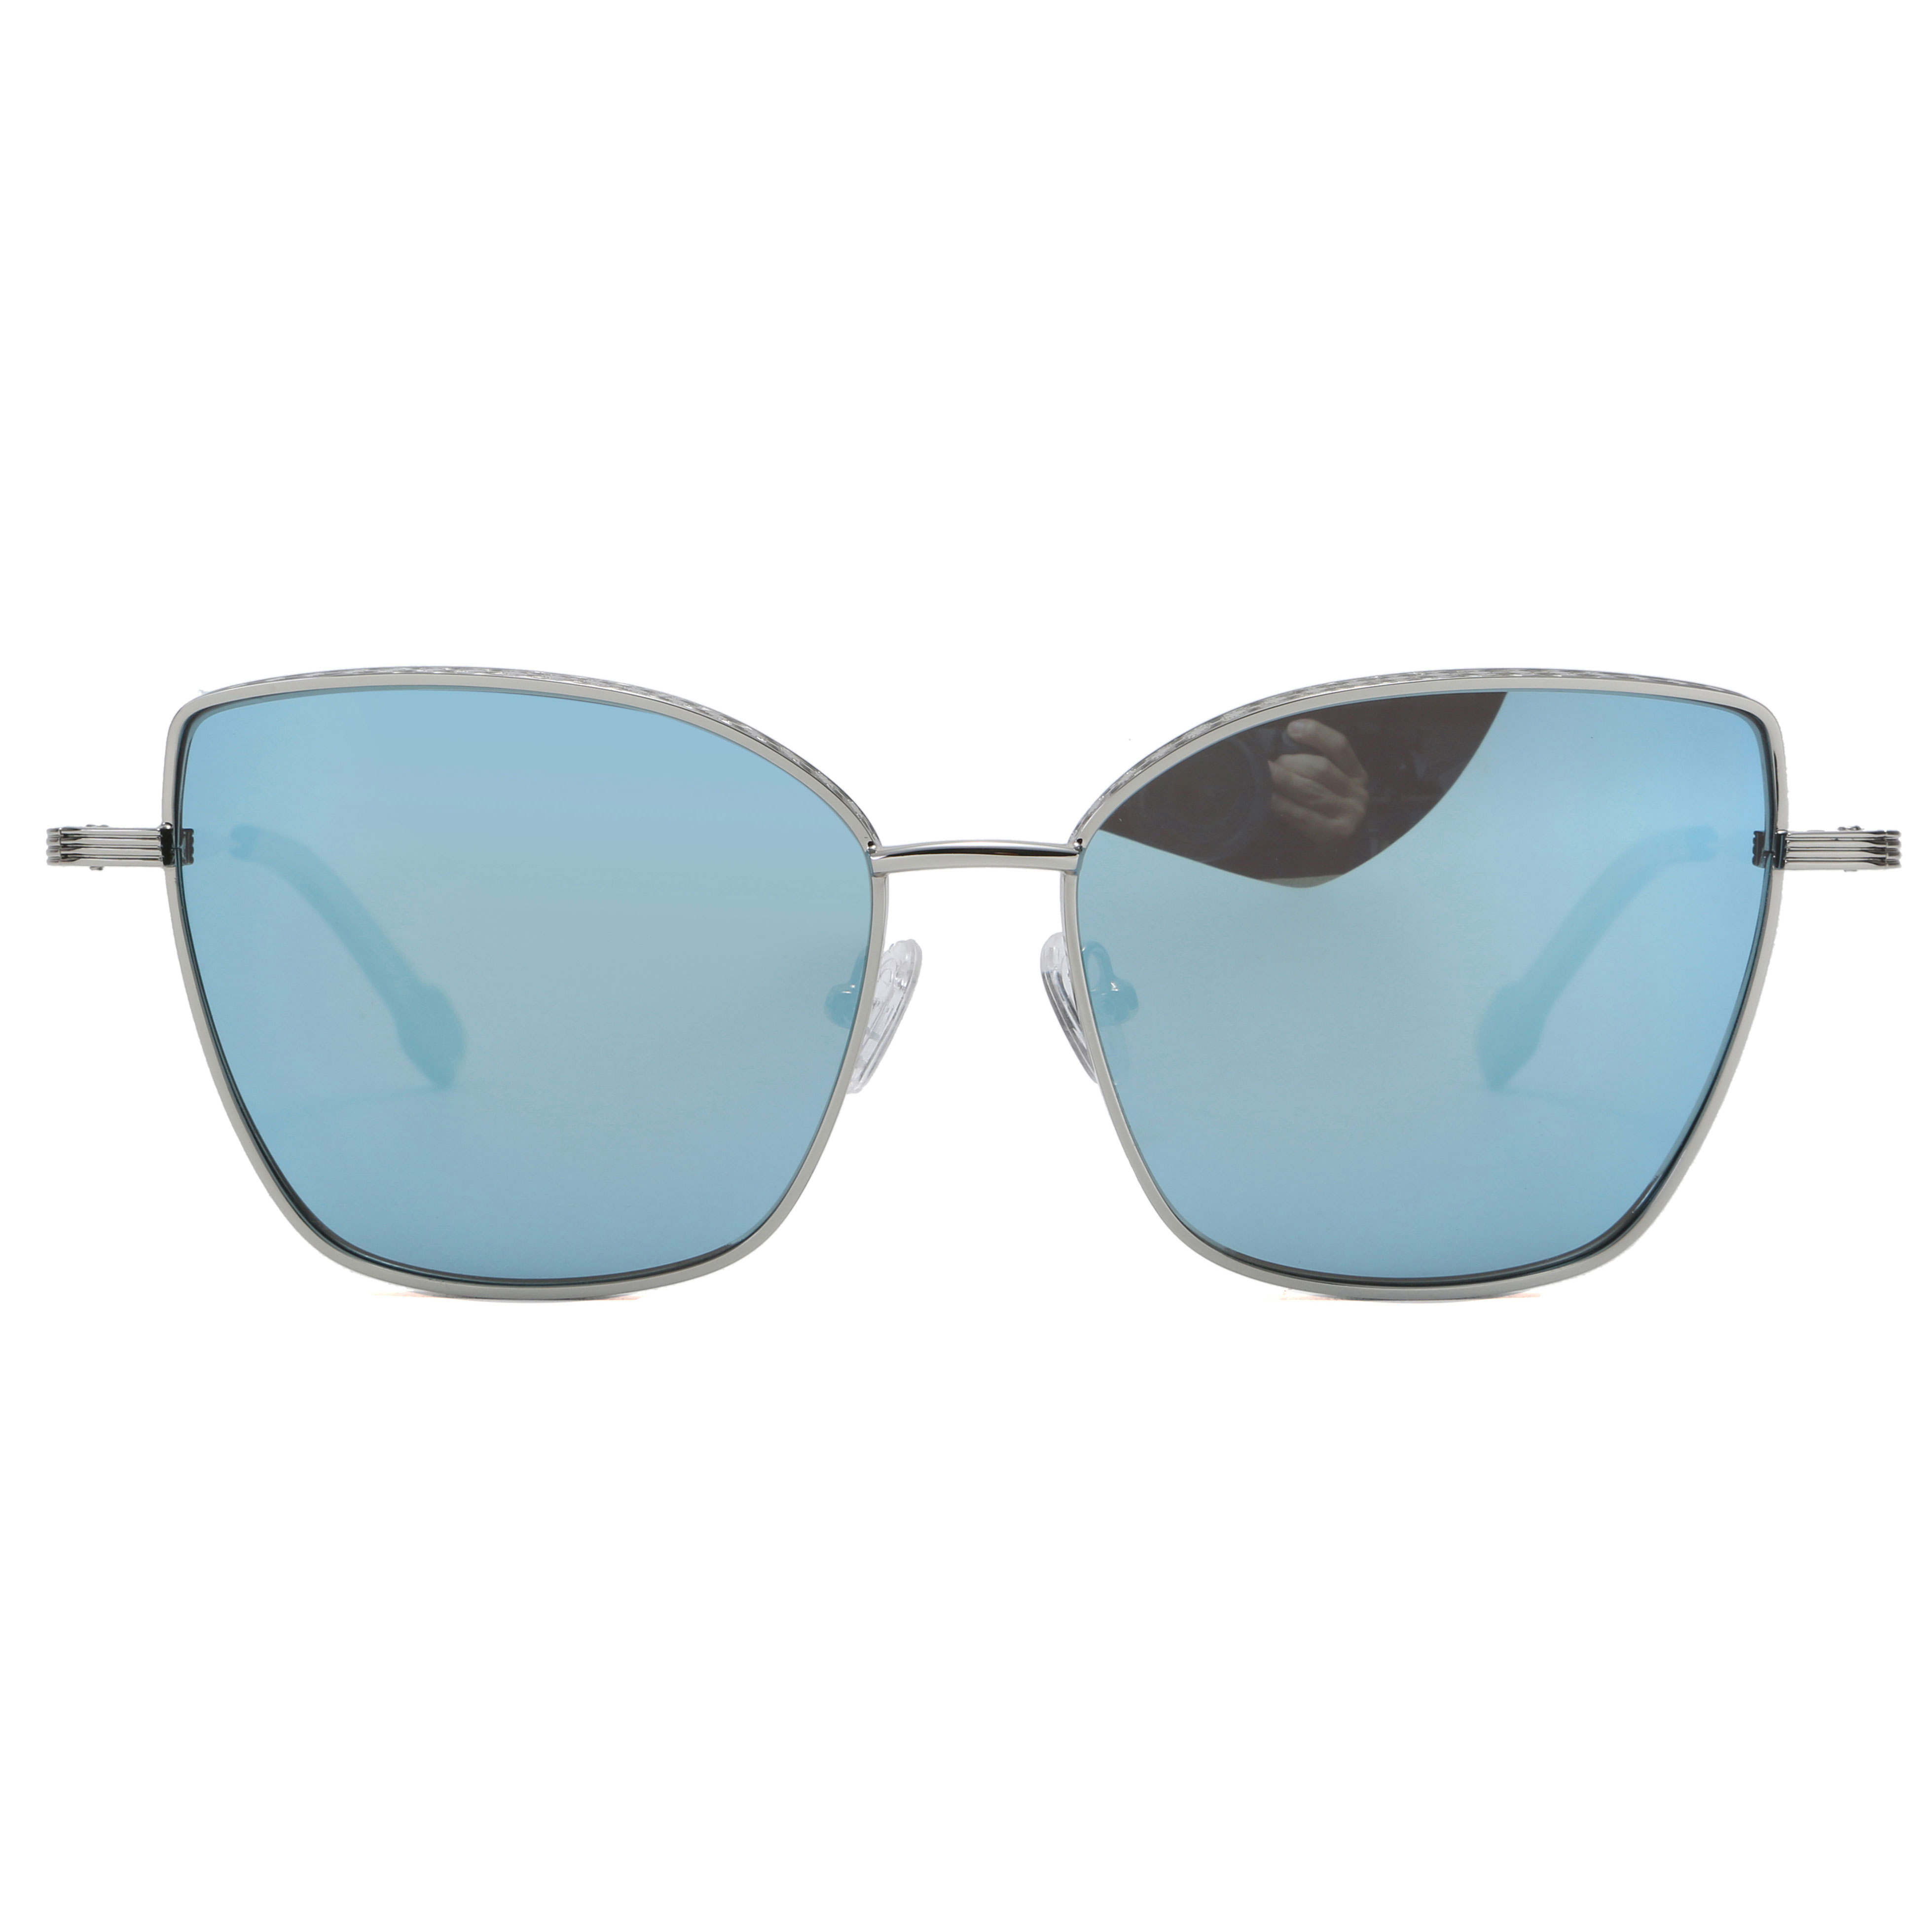 Outdoor Fashionable Uv Proection Polarized Metal Frame Sunglasses ...